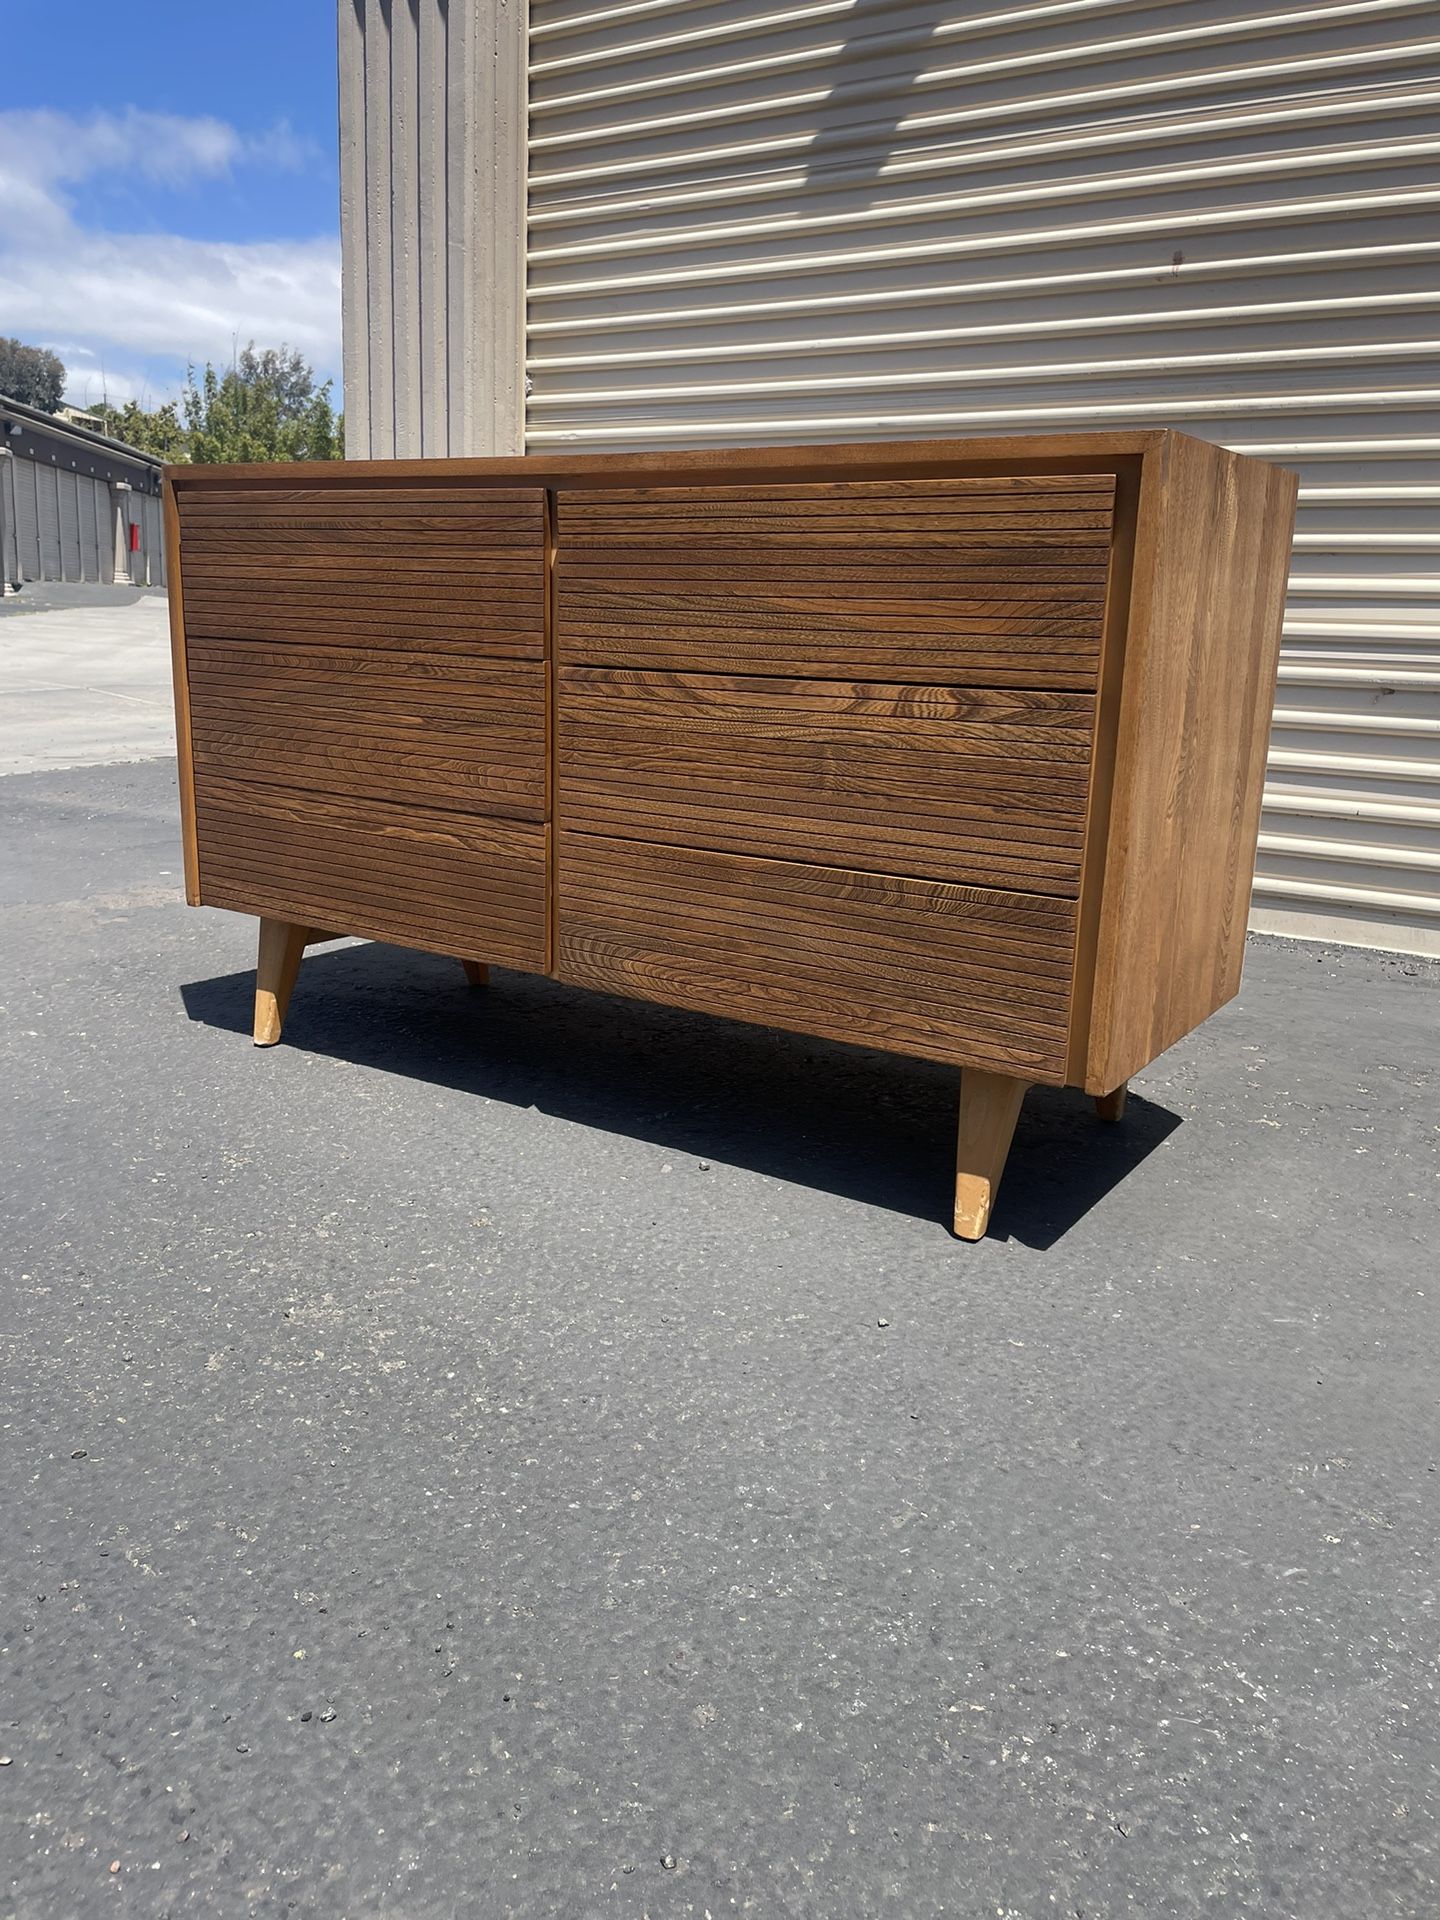 Mid Century Modern Solid Wood Dresser